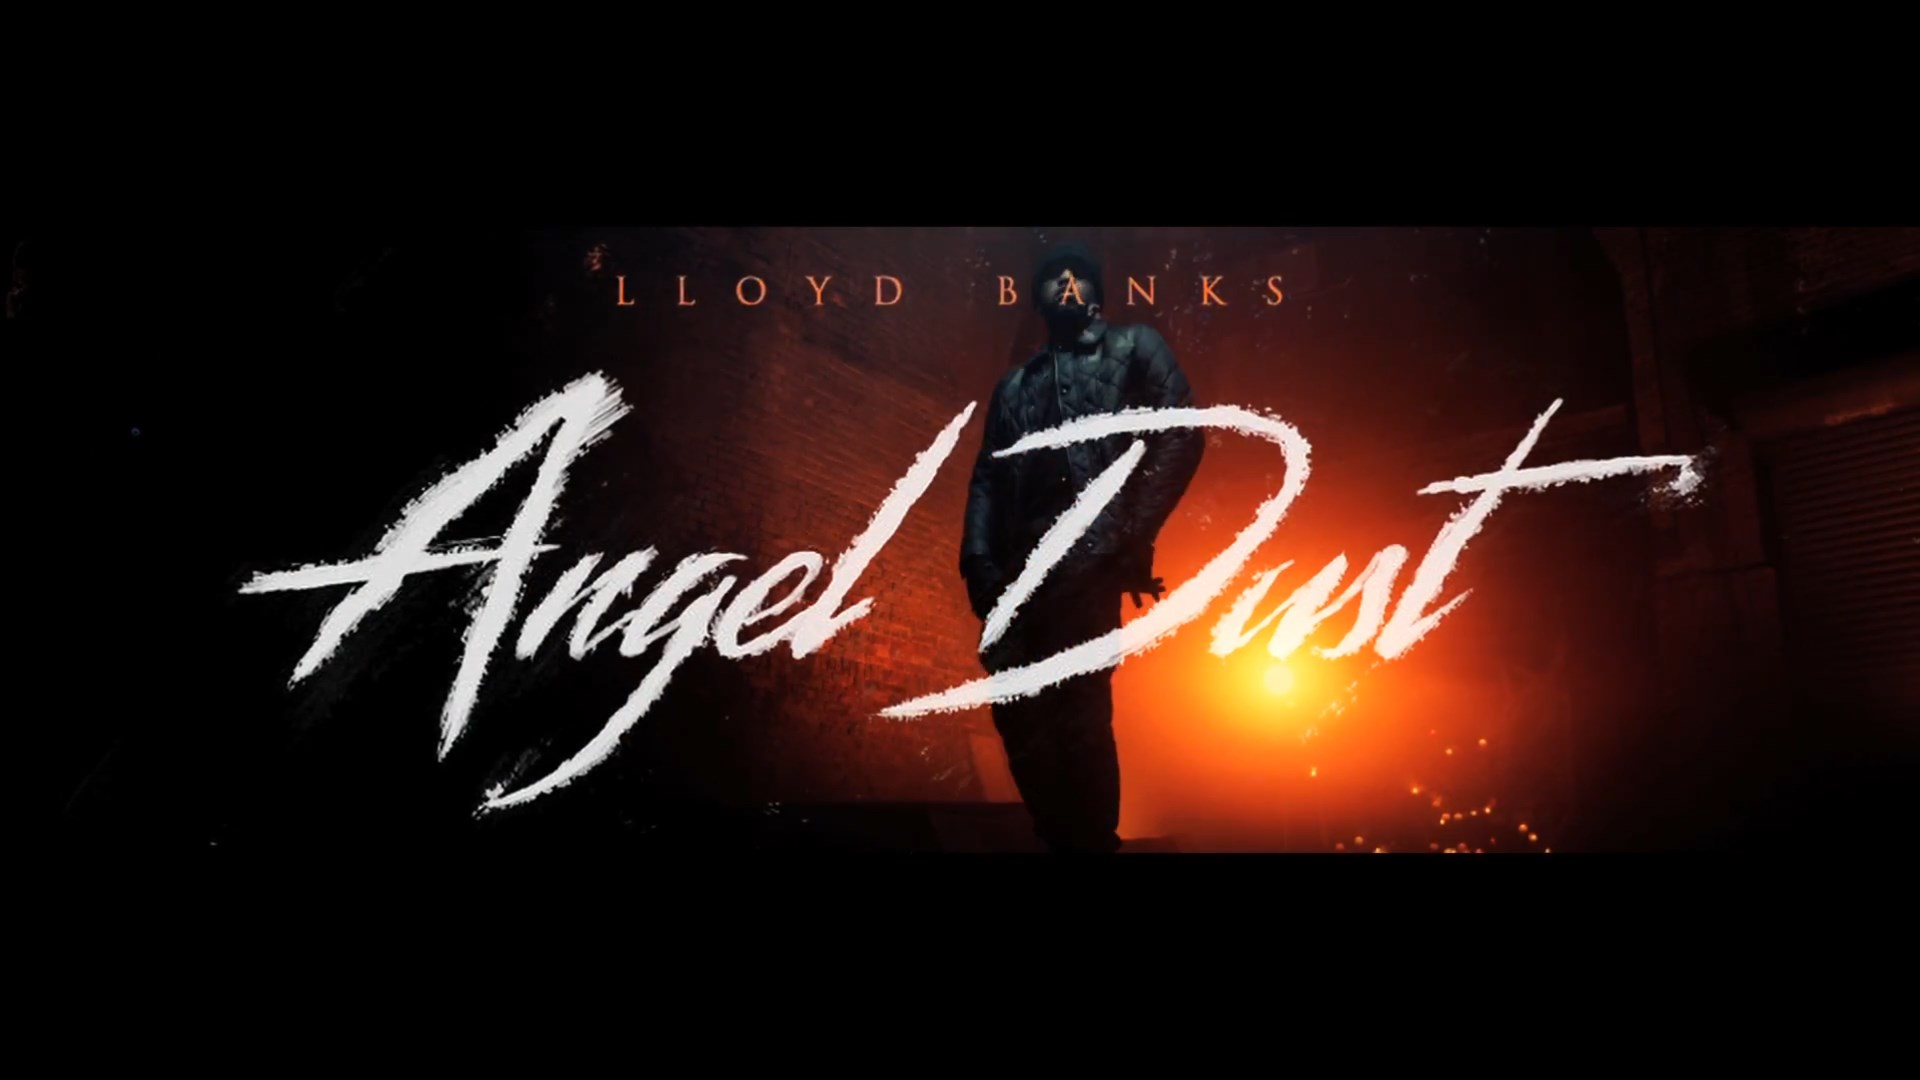 Lloyd Banks - Angel Dust